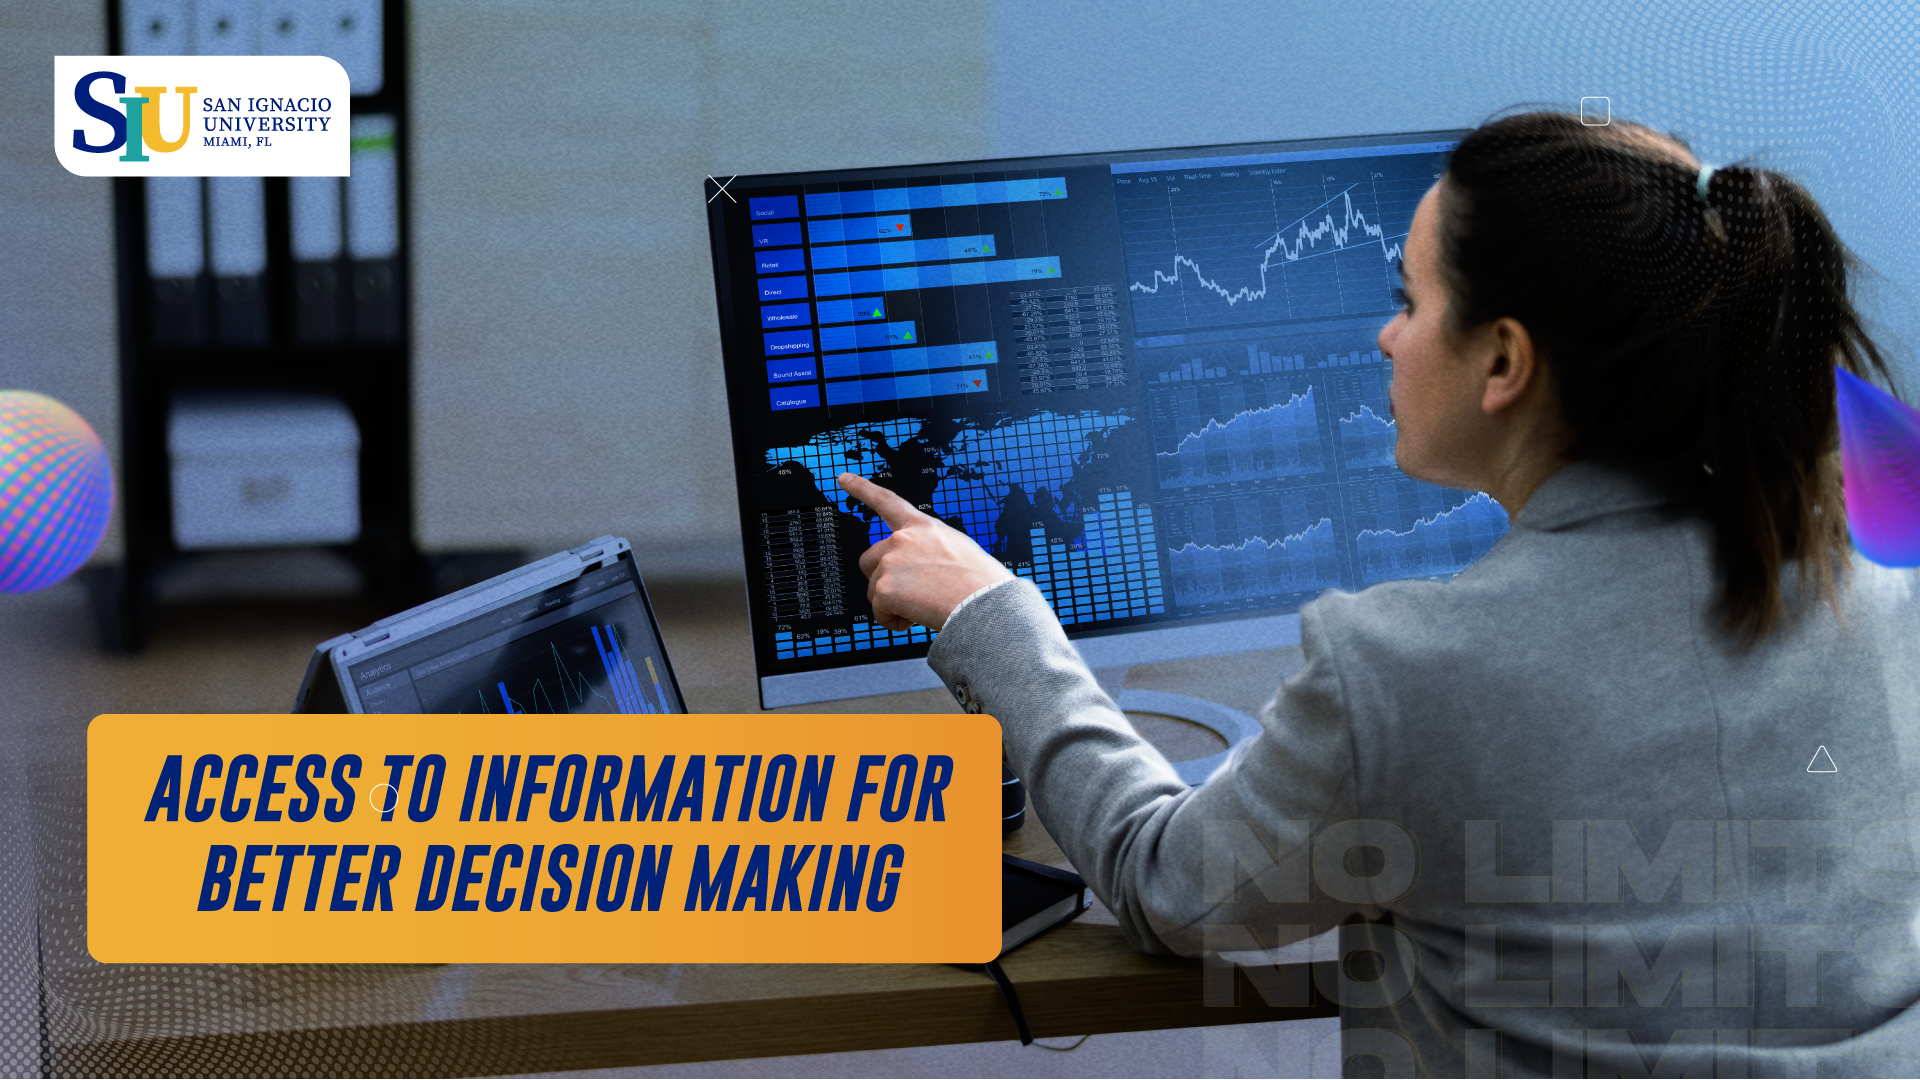 Access to information for better decision making by Pedro Abelardo Maldonado Garrido